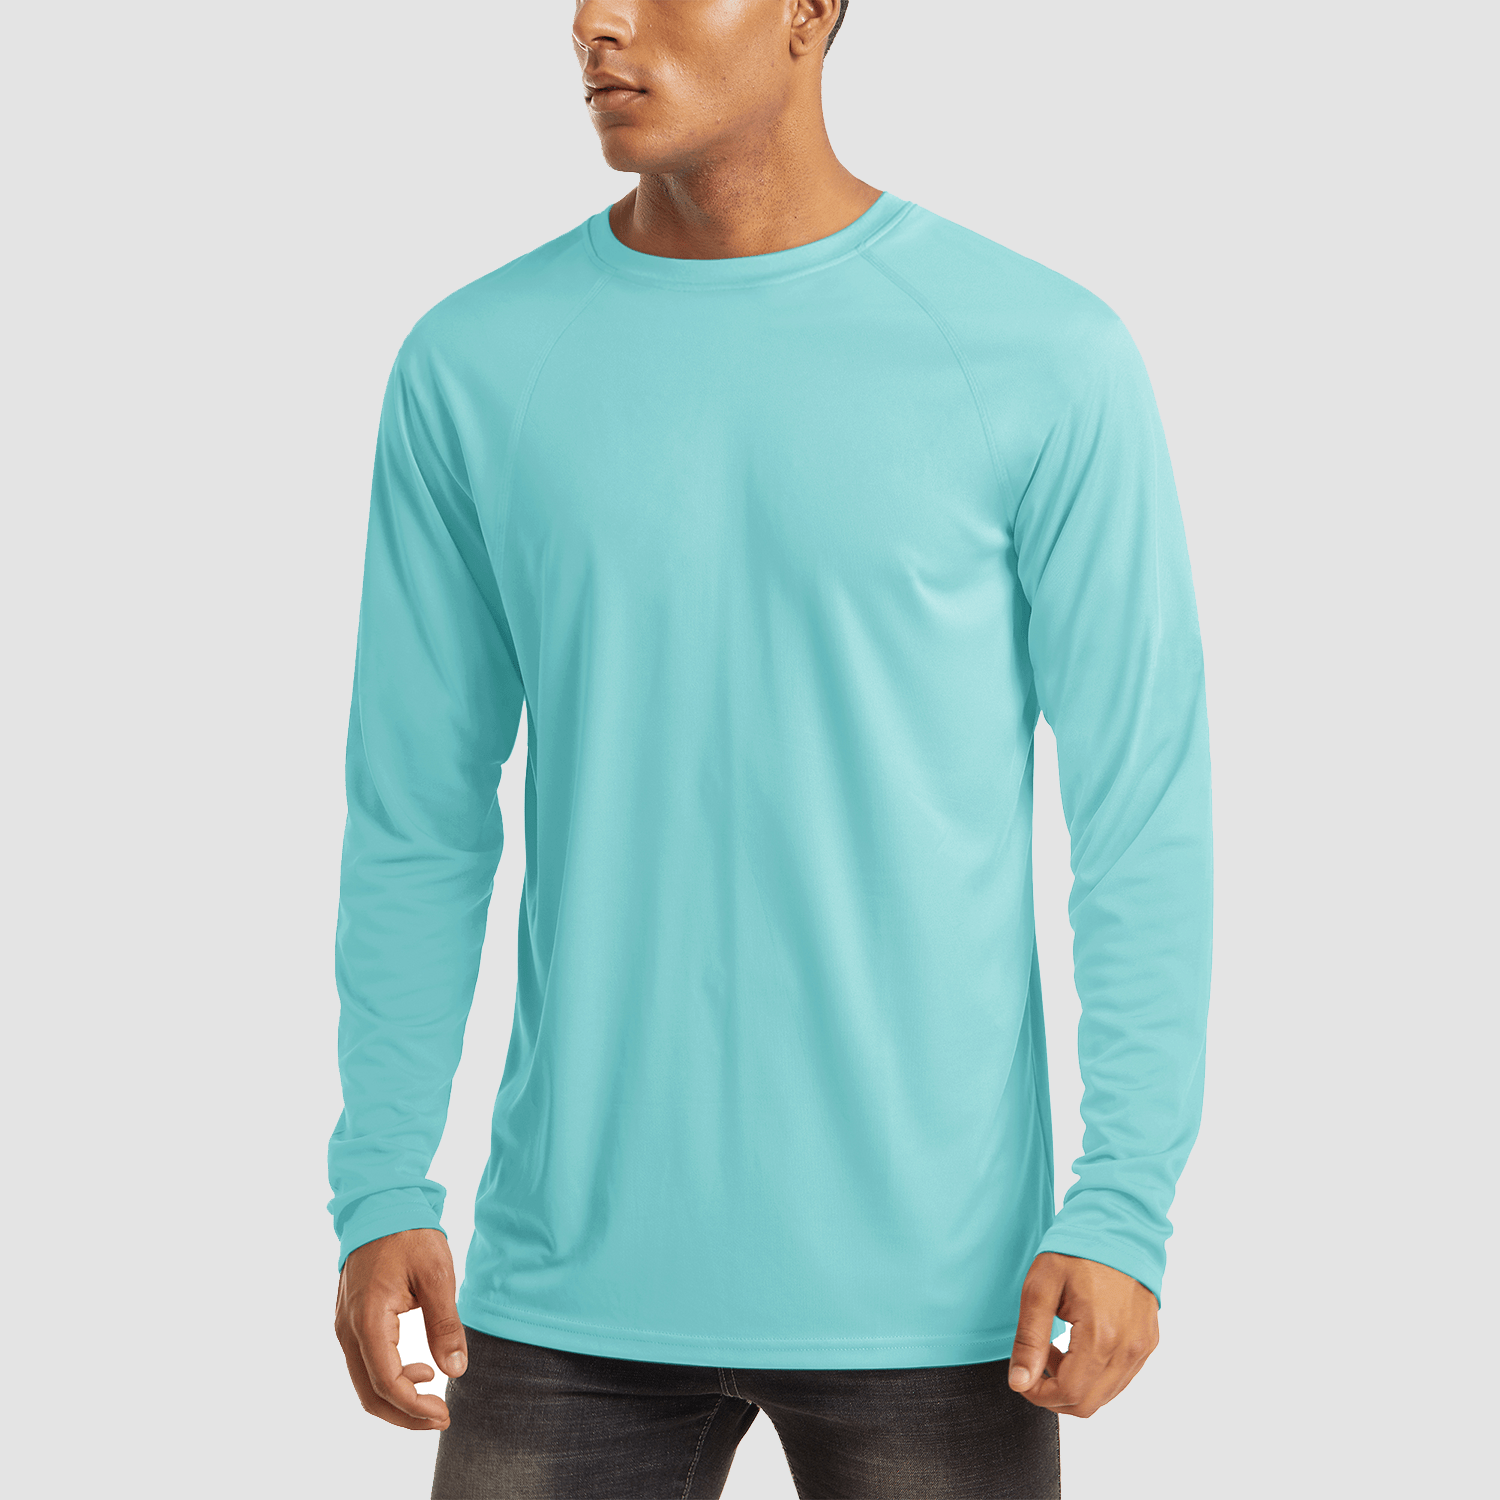 【Buy 4 Get 4th Free】Men's Long Sleeve Hooded Shirt UPF 50+ Athletic Shirt, Aqua Blue / XXL